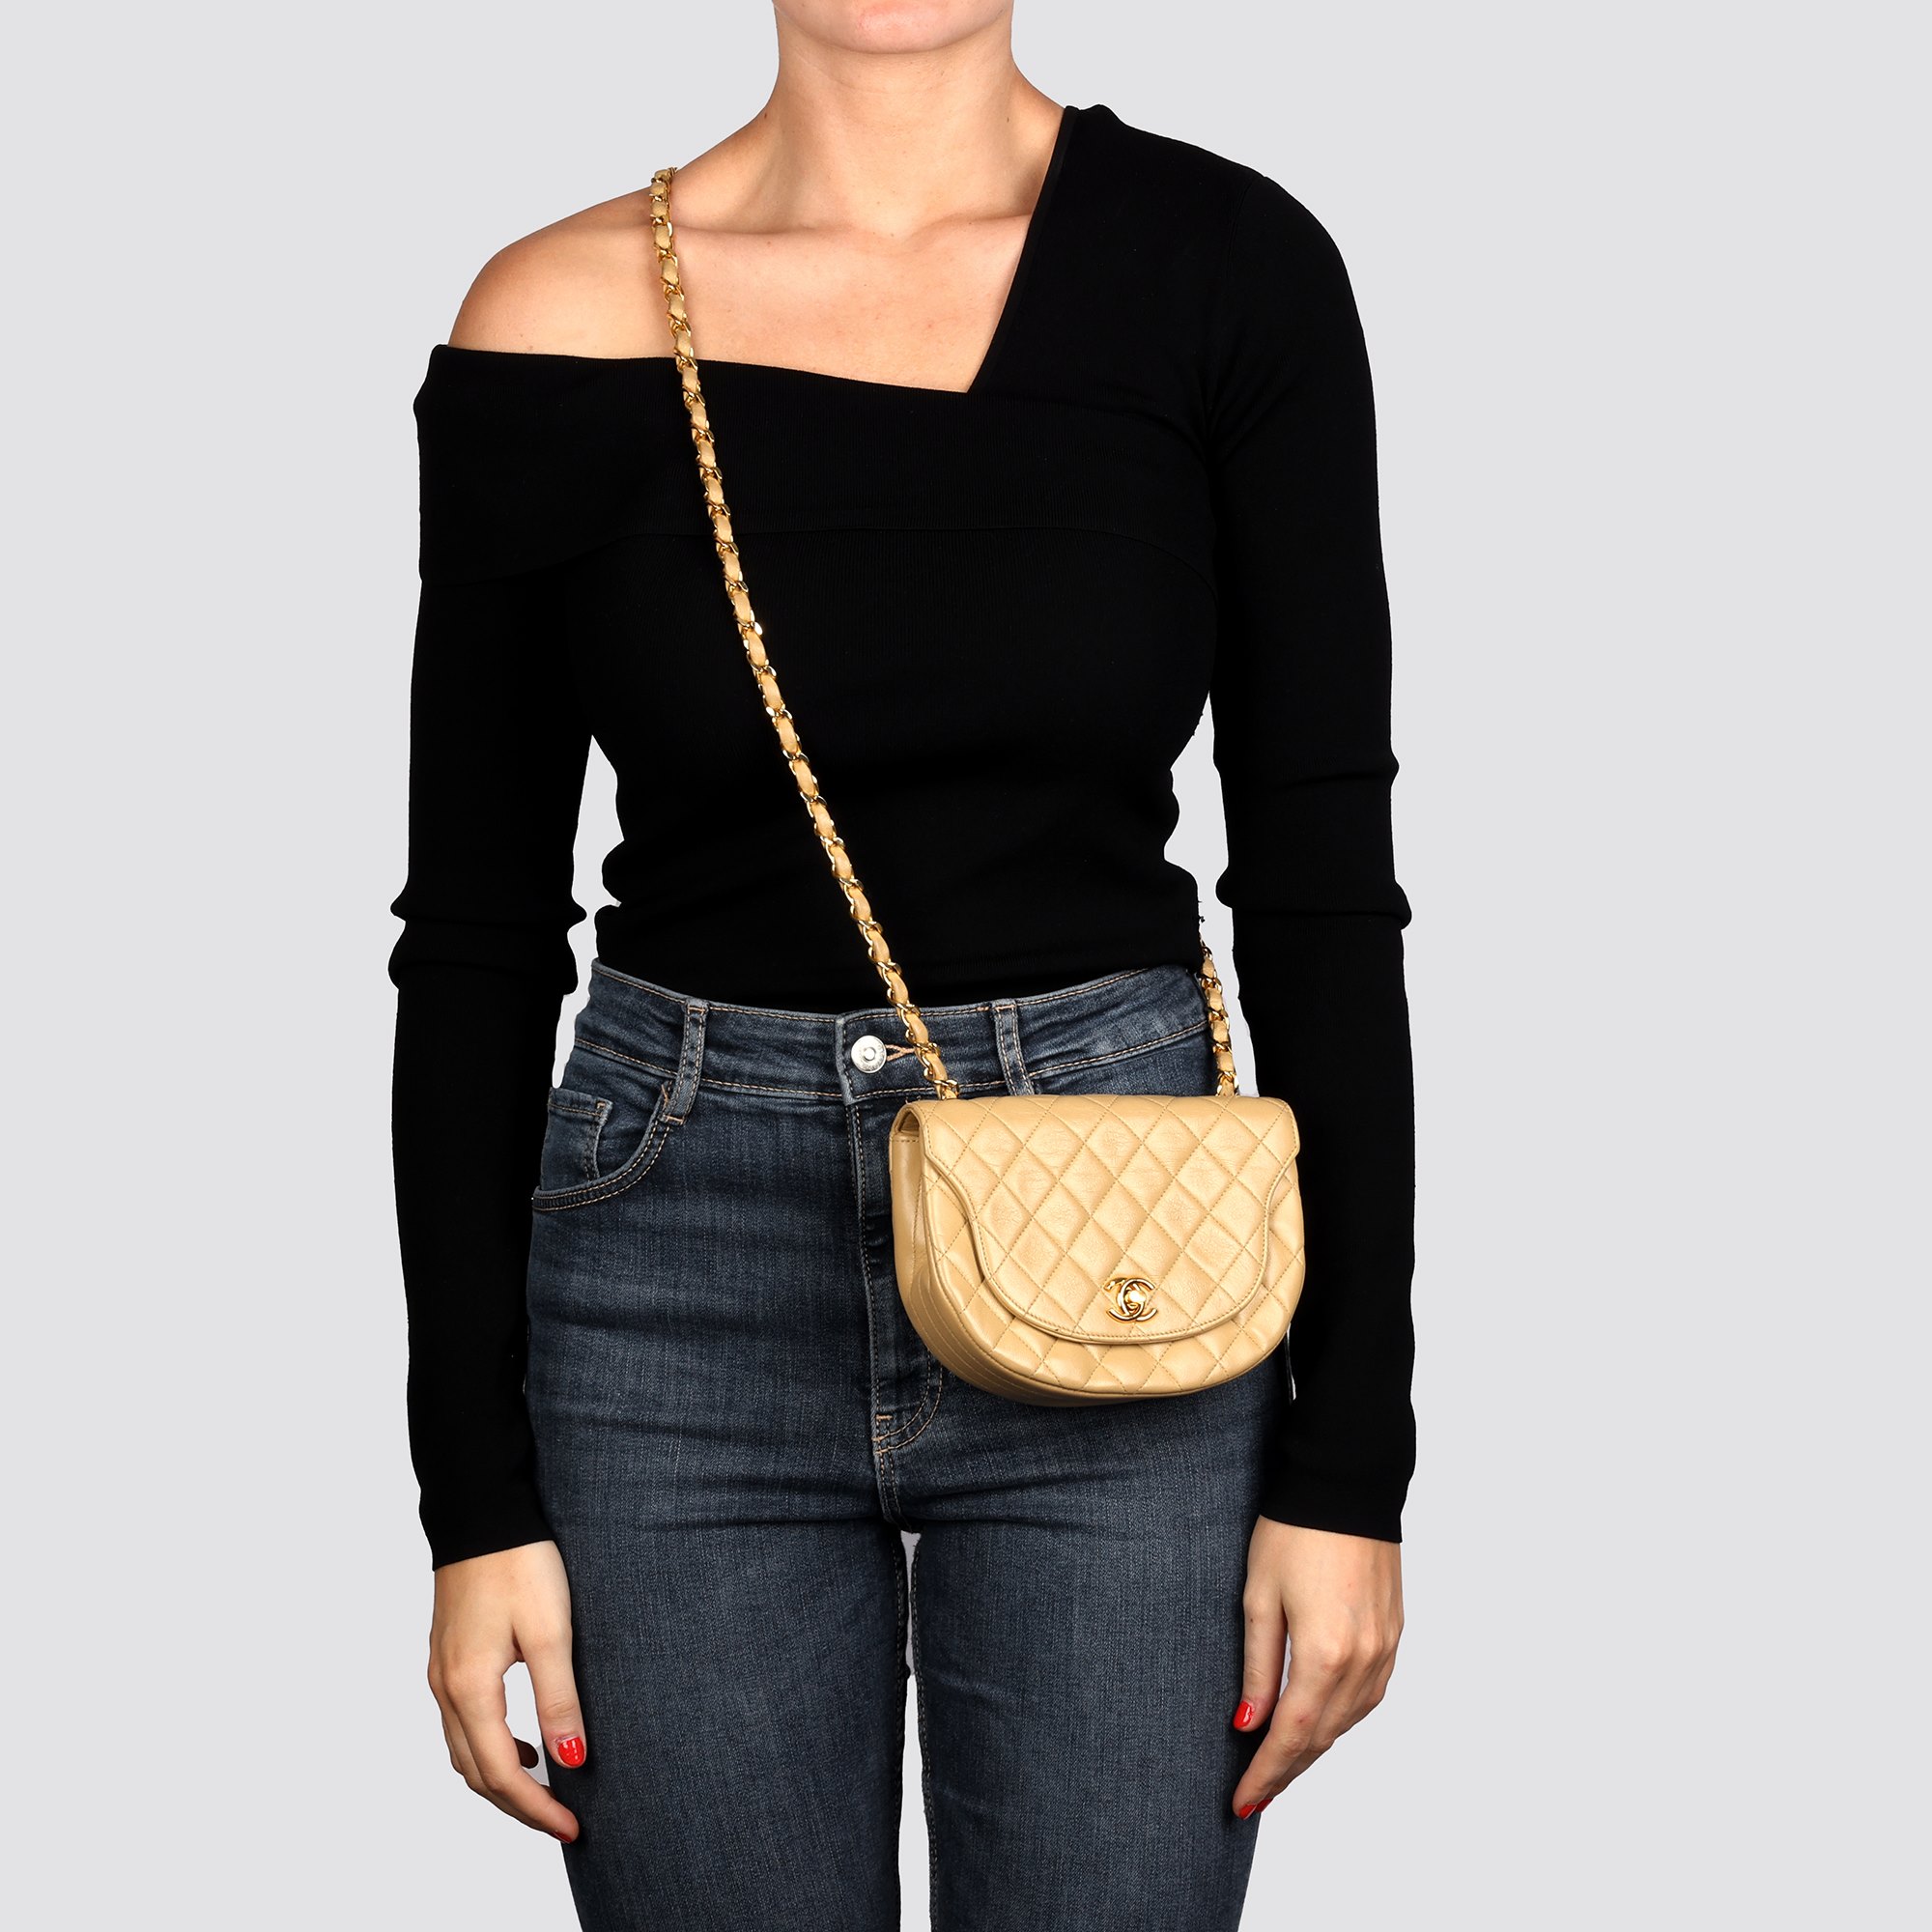 Chanel Beige Quilted Lambskin Vintage Half Moon Mini Flap Bag